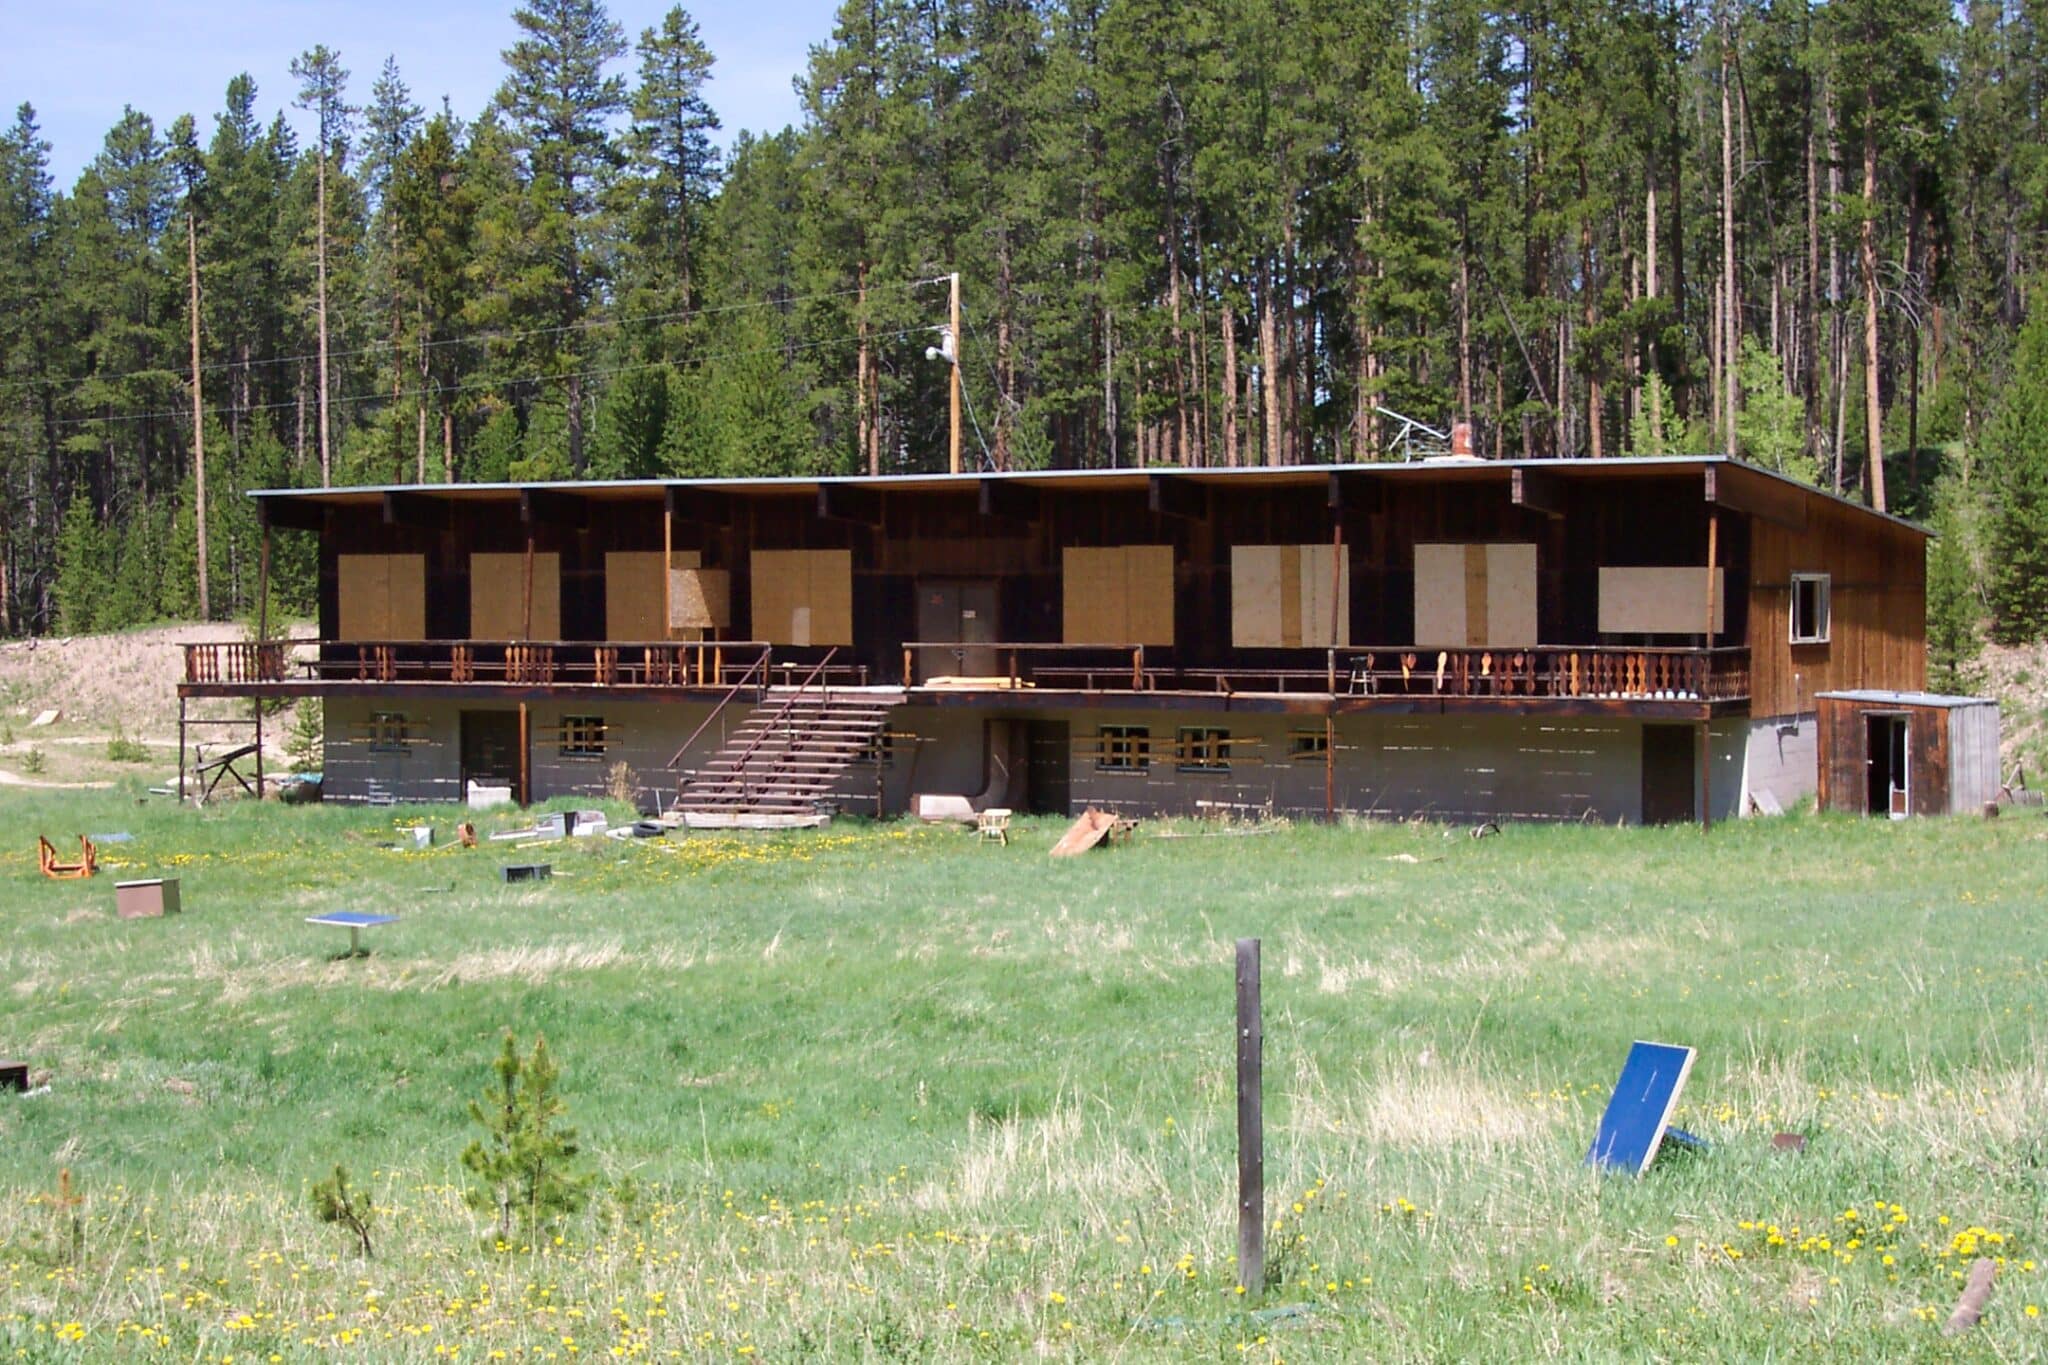 Abandoned one story wooden ski lodge, formerly Idlewild. 